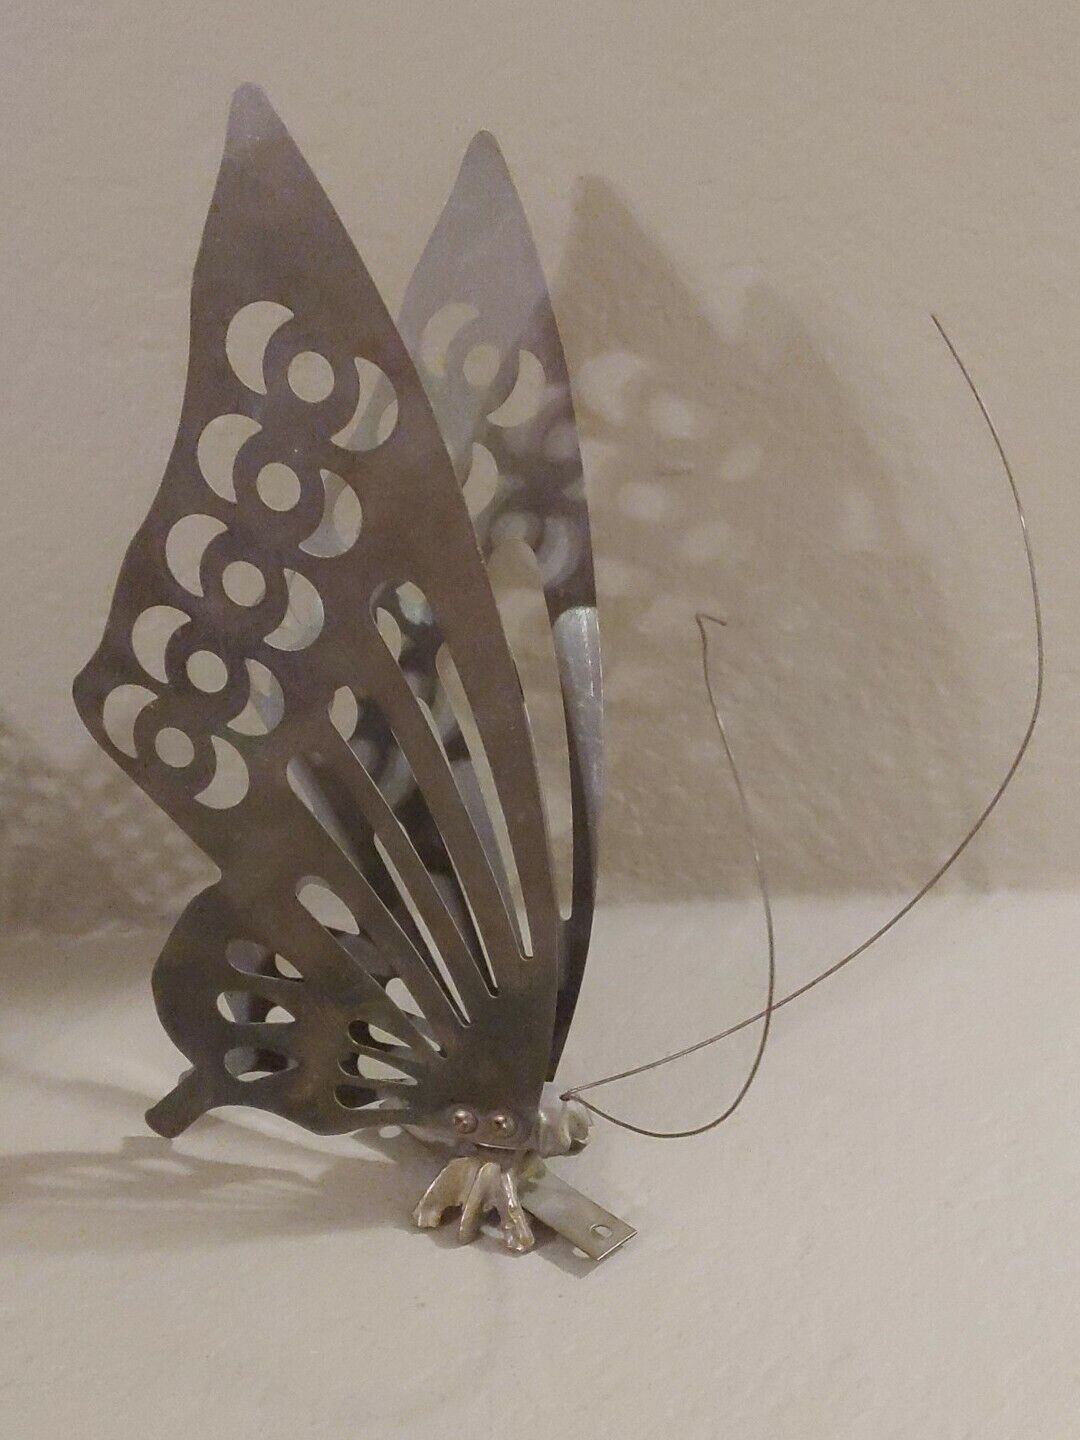 Set of 3 Metal Butterflies 3D Wall Mounted Butterfly Great Shadow Cast. Без бренда - фотография #7